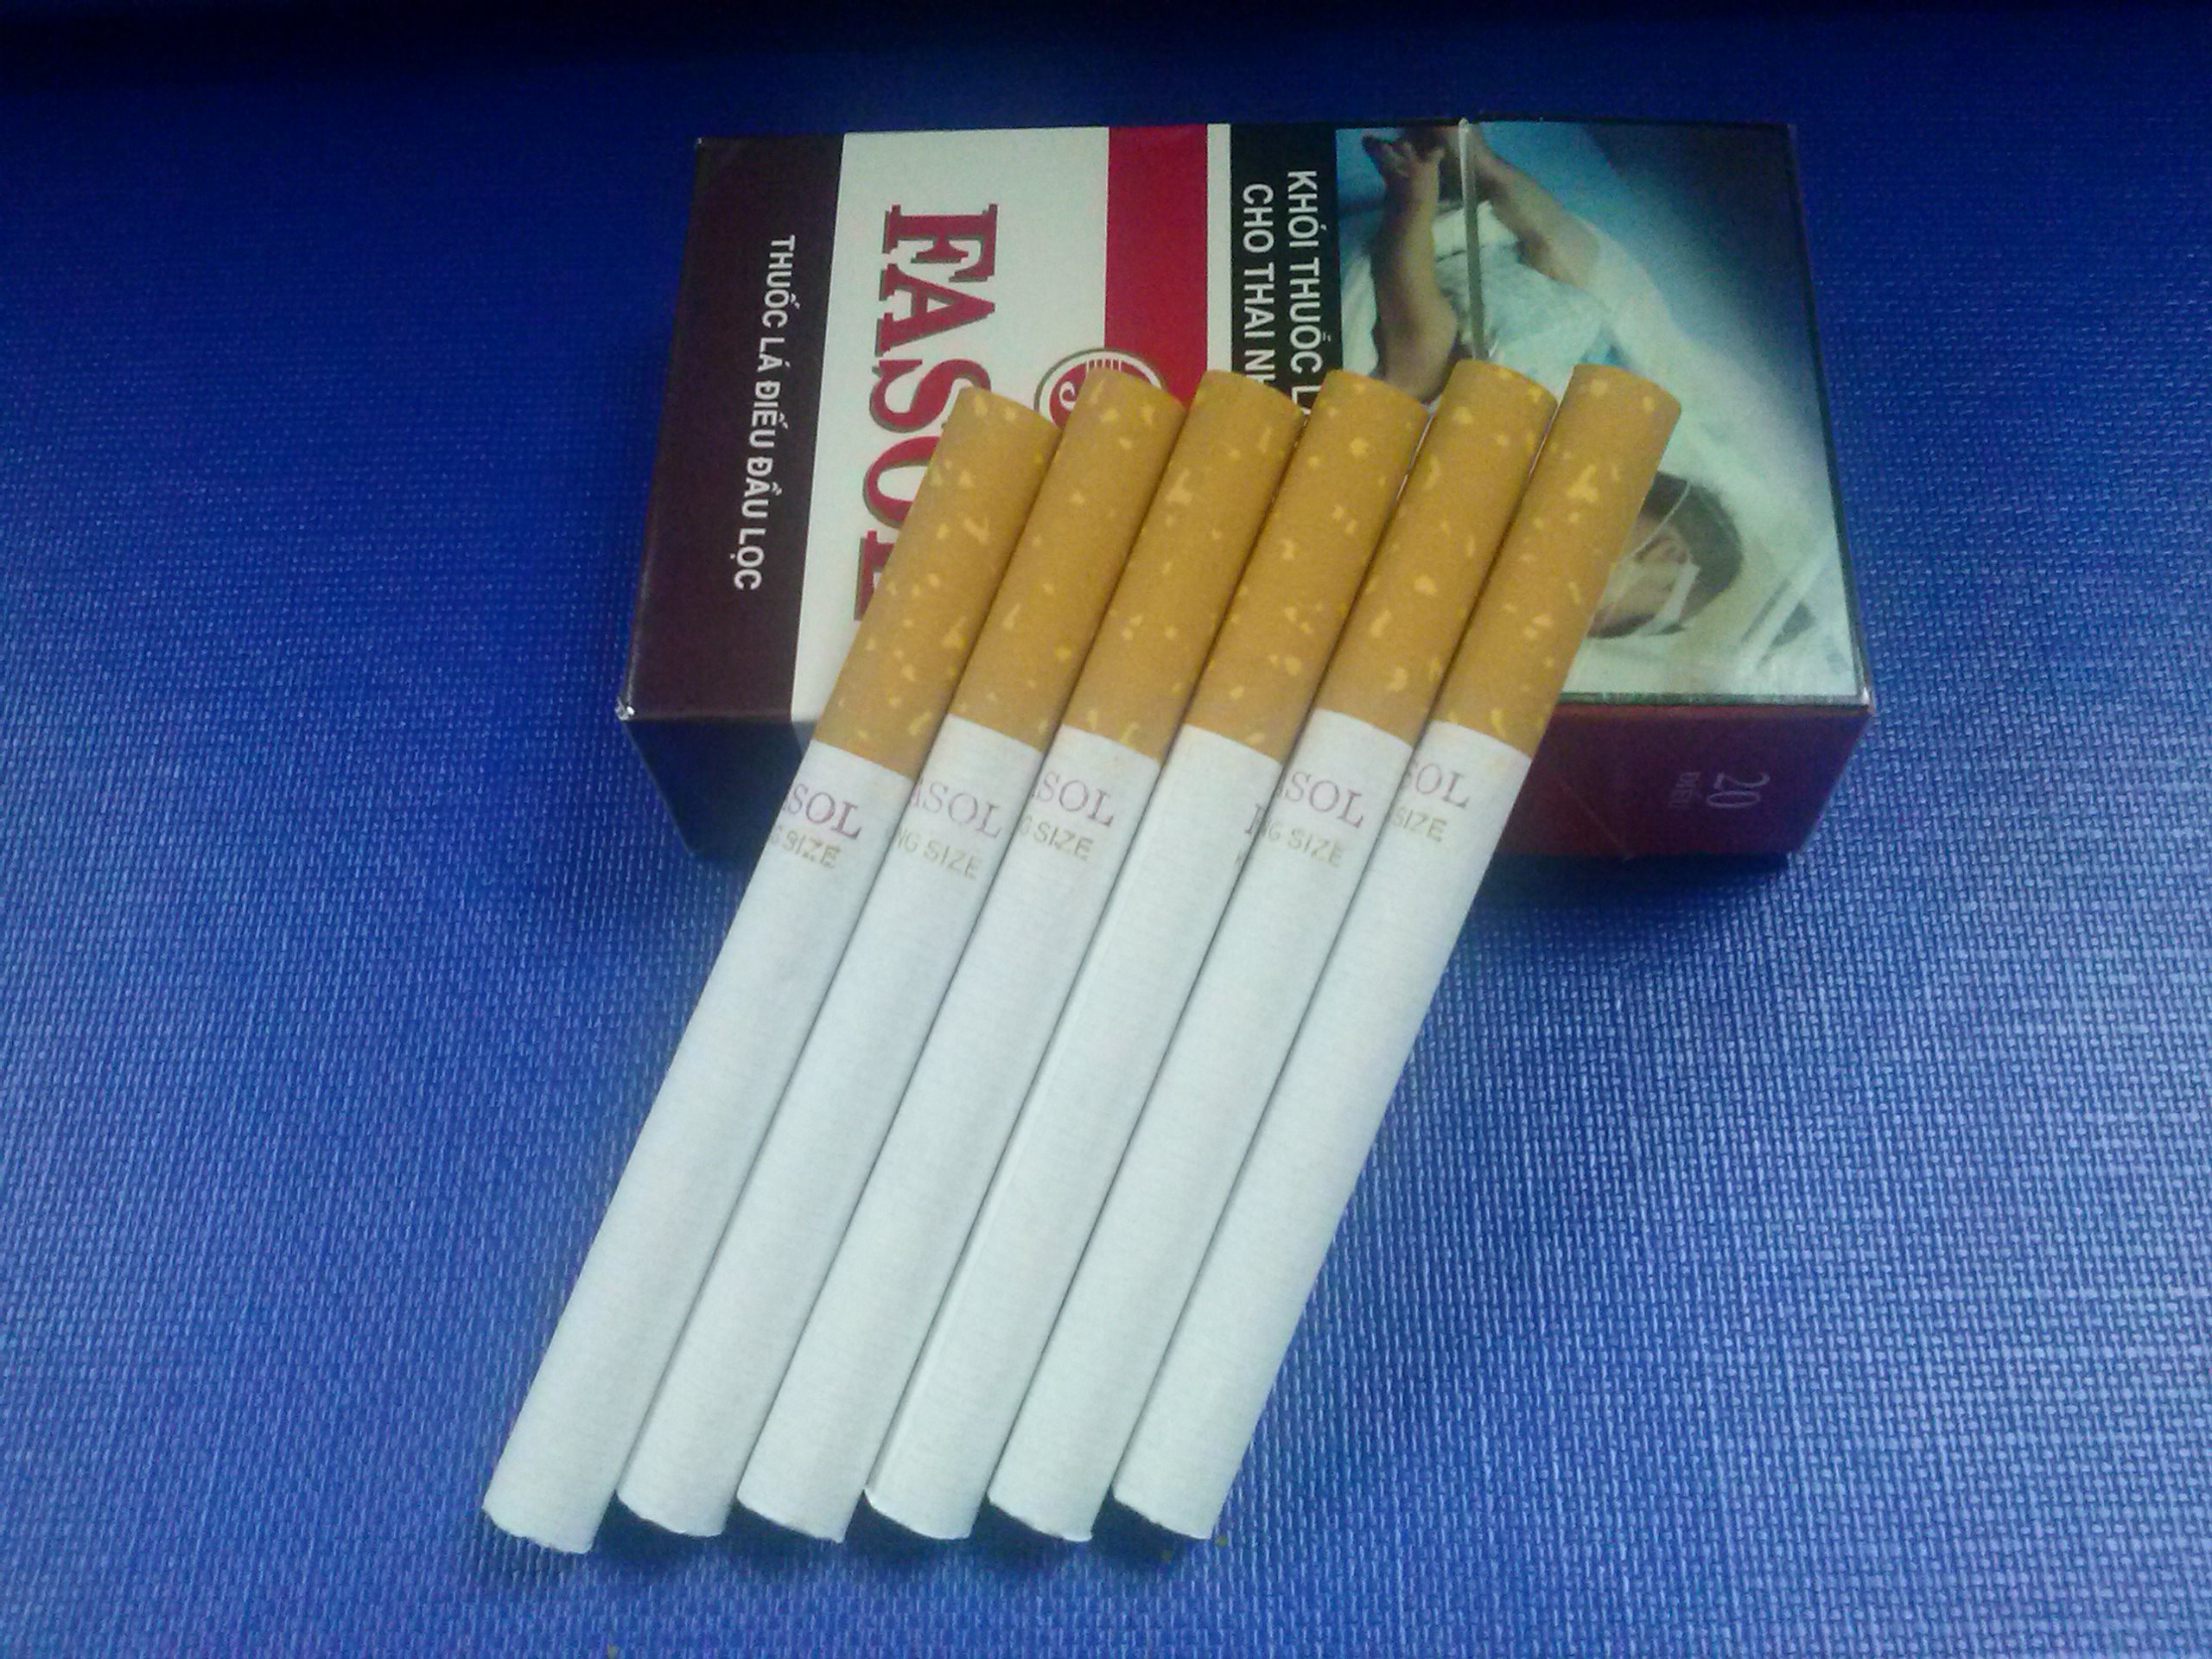 Fasol Filter Cigarettes